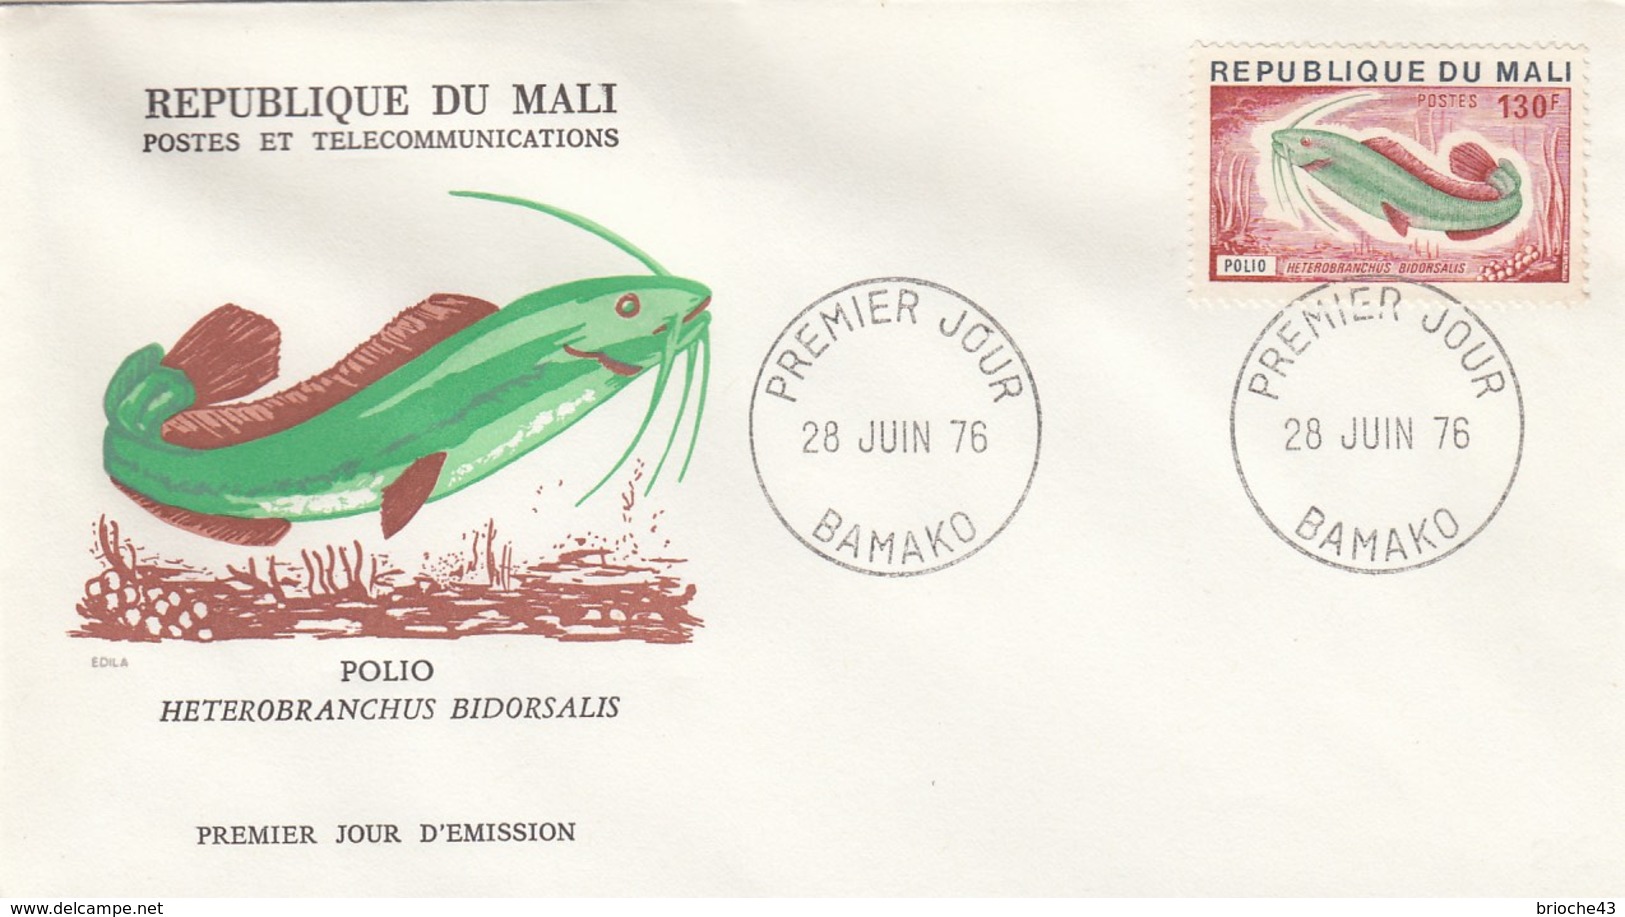 REPUBLIQUE DU MALI - FDC POLIO HETEROBRANCHUS BIDORSALIS  - CACHET 1er JOUR 28.6.76 BAMAKO  /2 - Mali (1959-...)